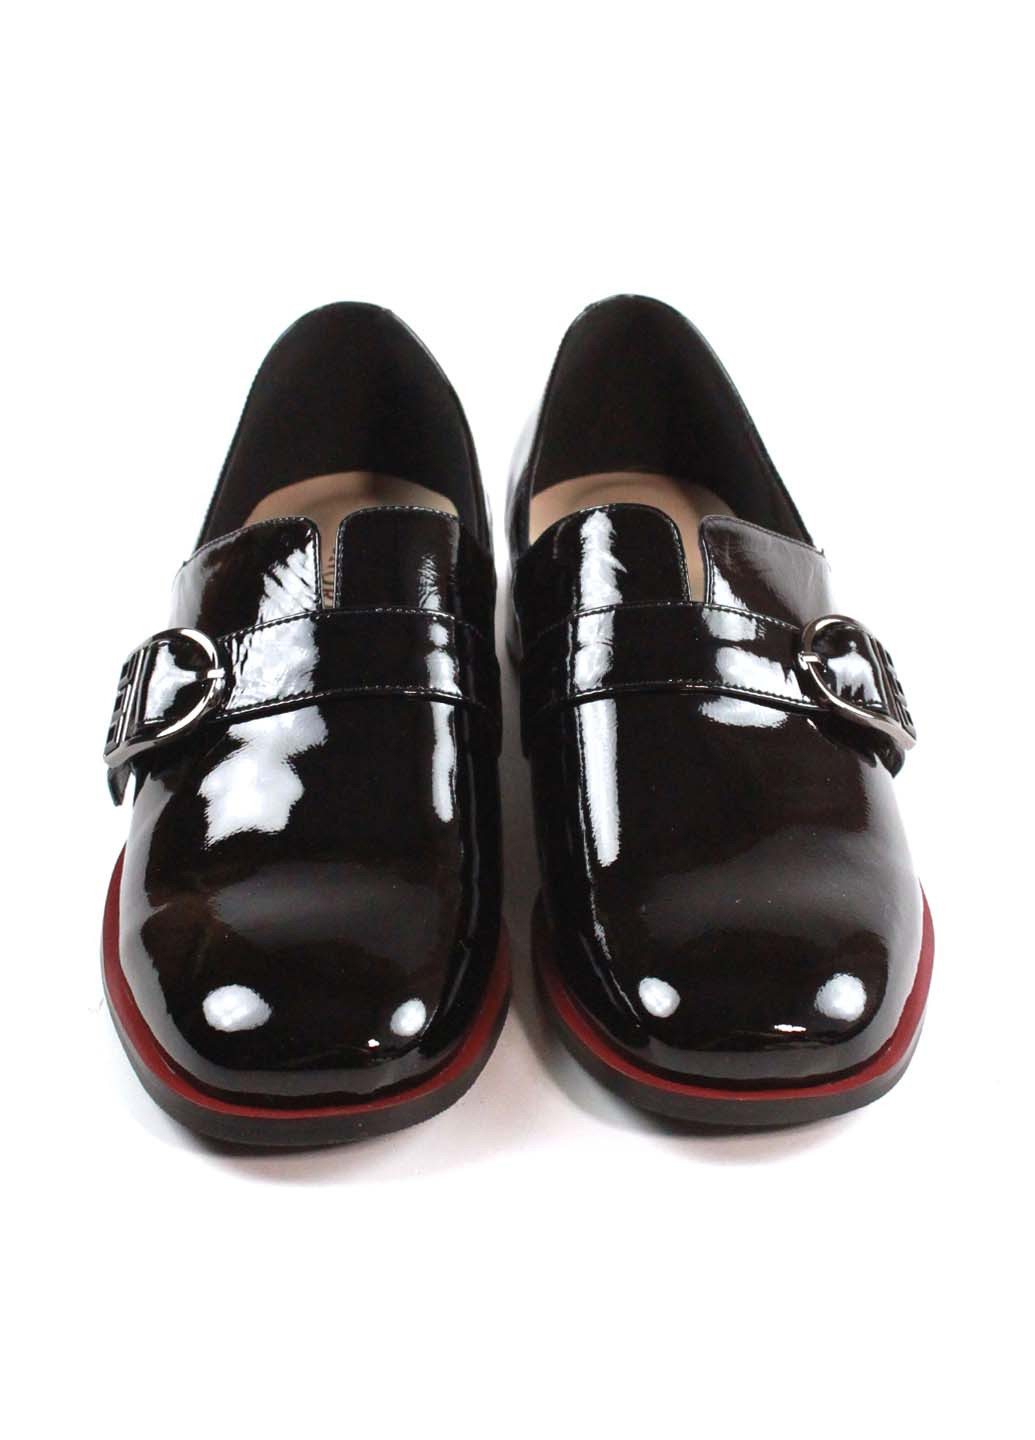 Туфли Magnori на среднем каблуке с пряжкой